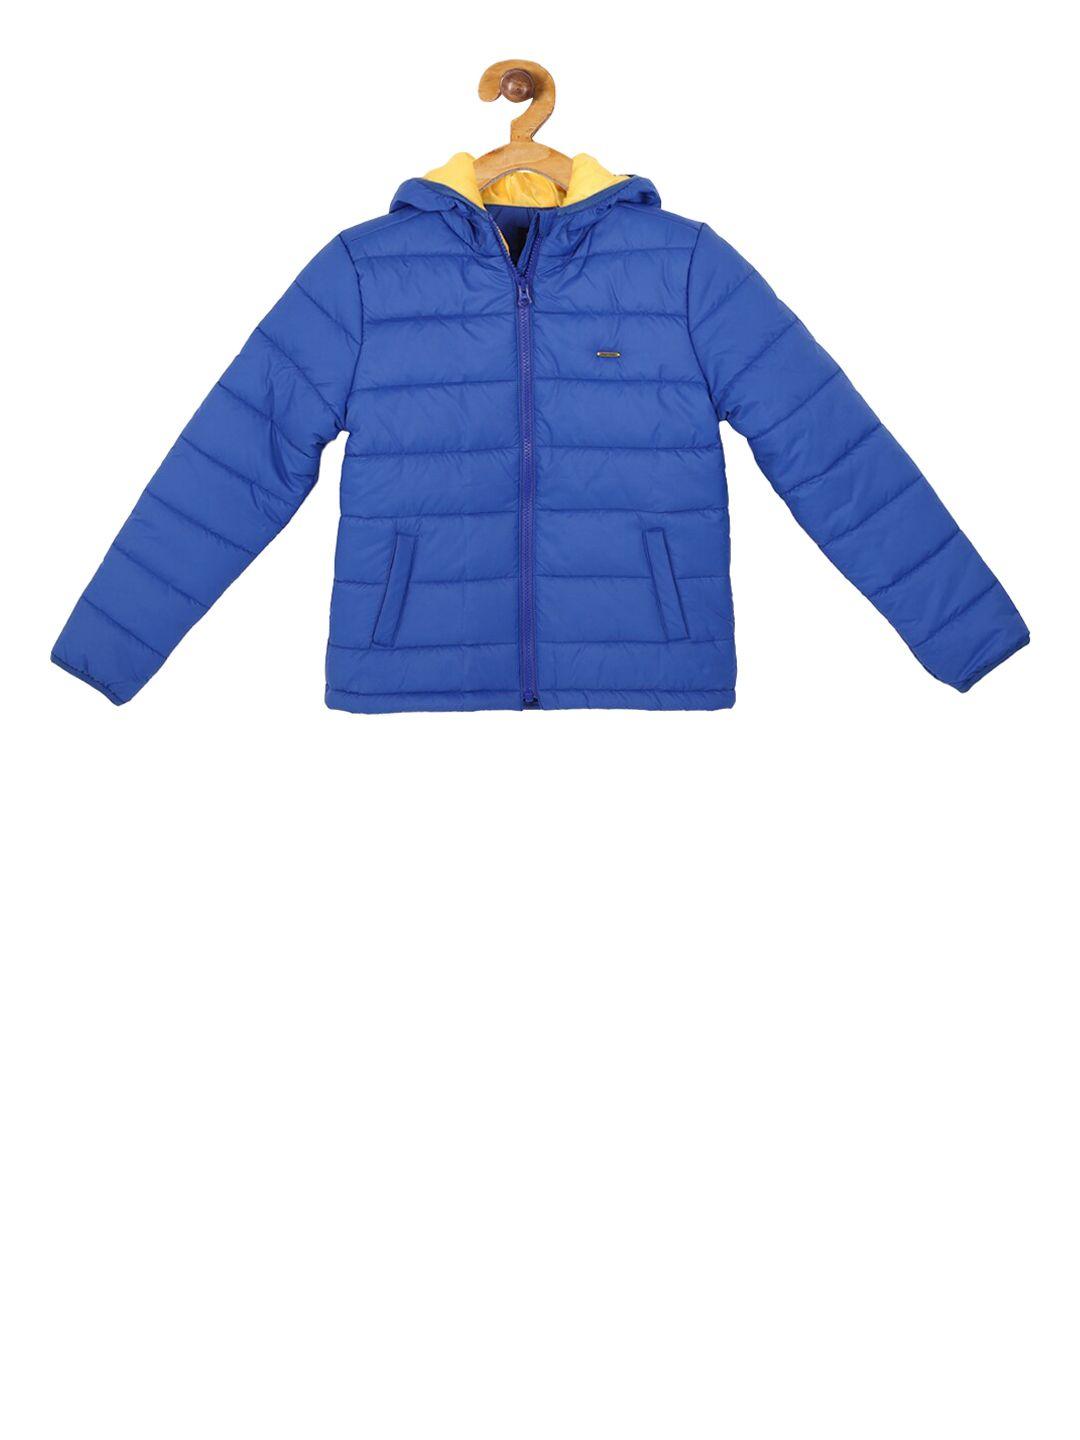 allen solly junior boys blue solid puffer jacket